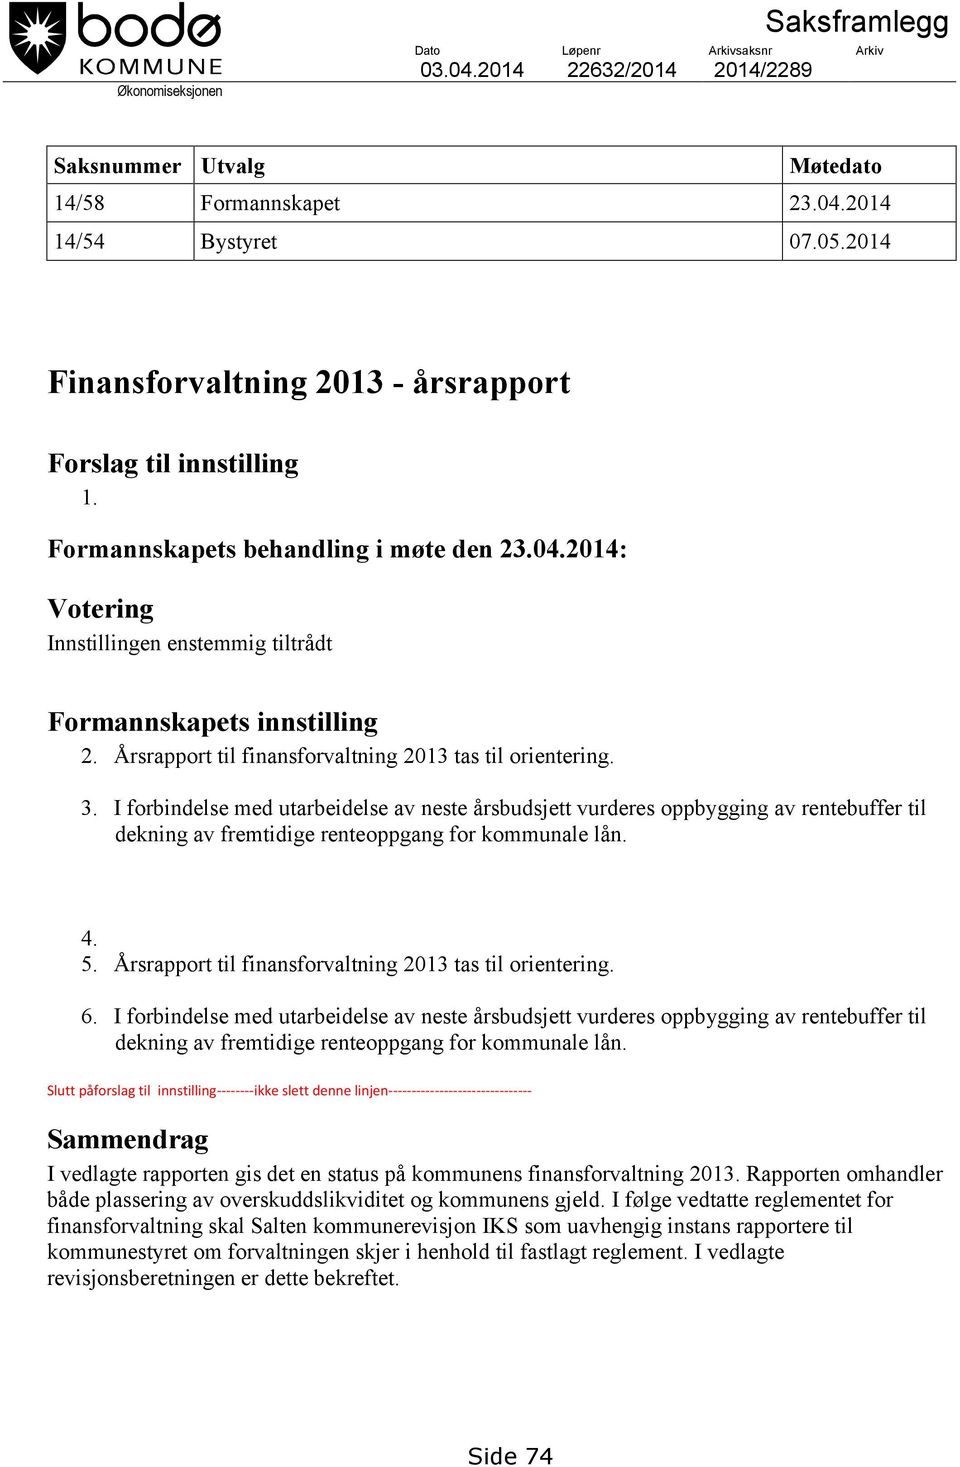 Årsrapport til finansforvaltning 2013 tas til orientering. 3.